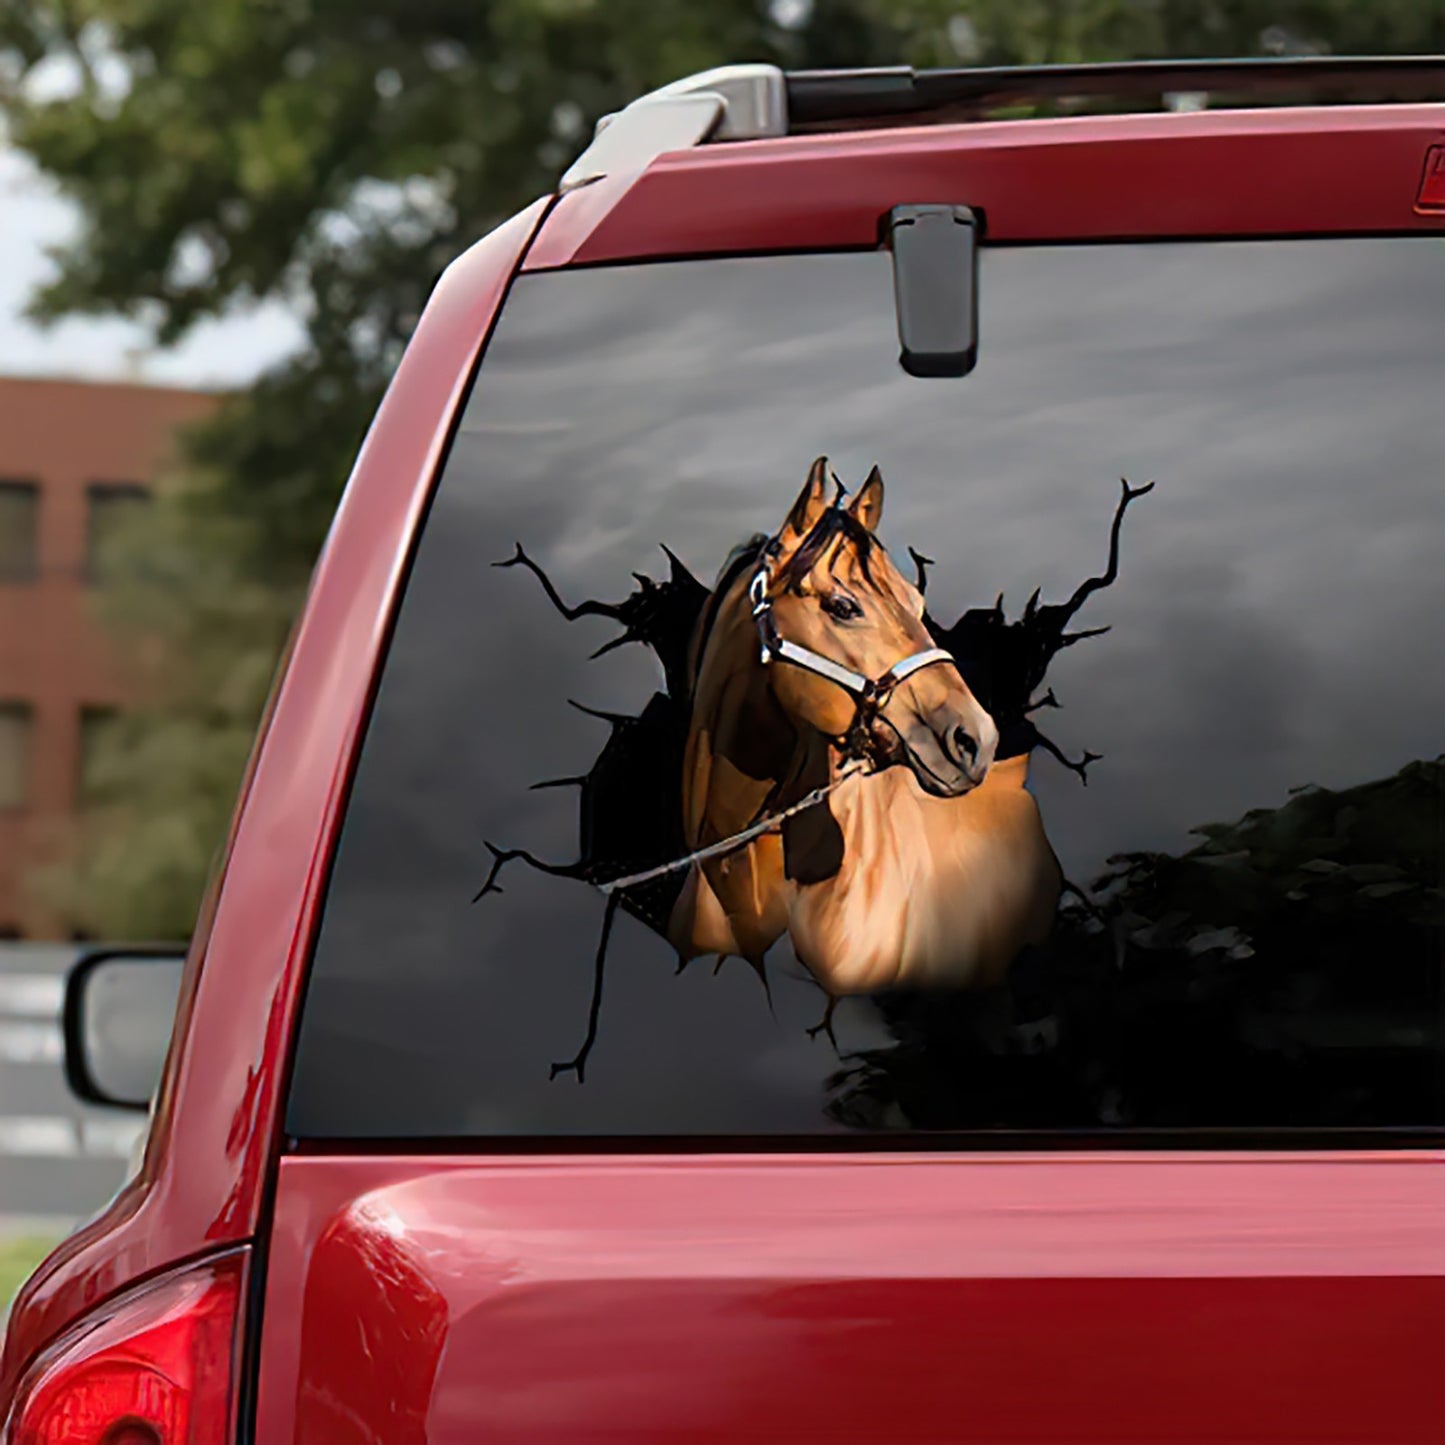 Etiqueta engomada estática del vidrio de la pasta de la ventana del coche del caballo del toro